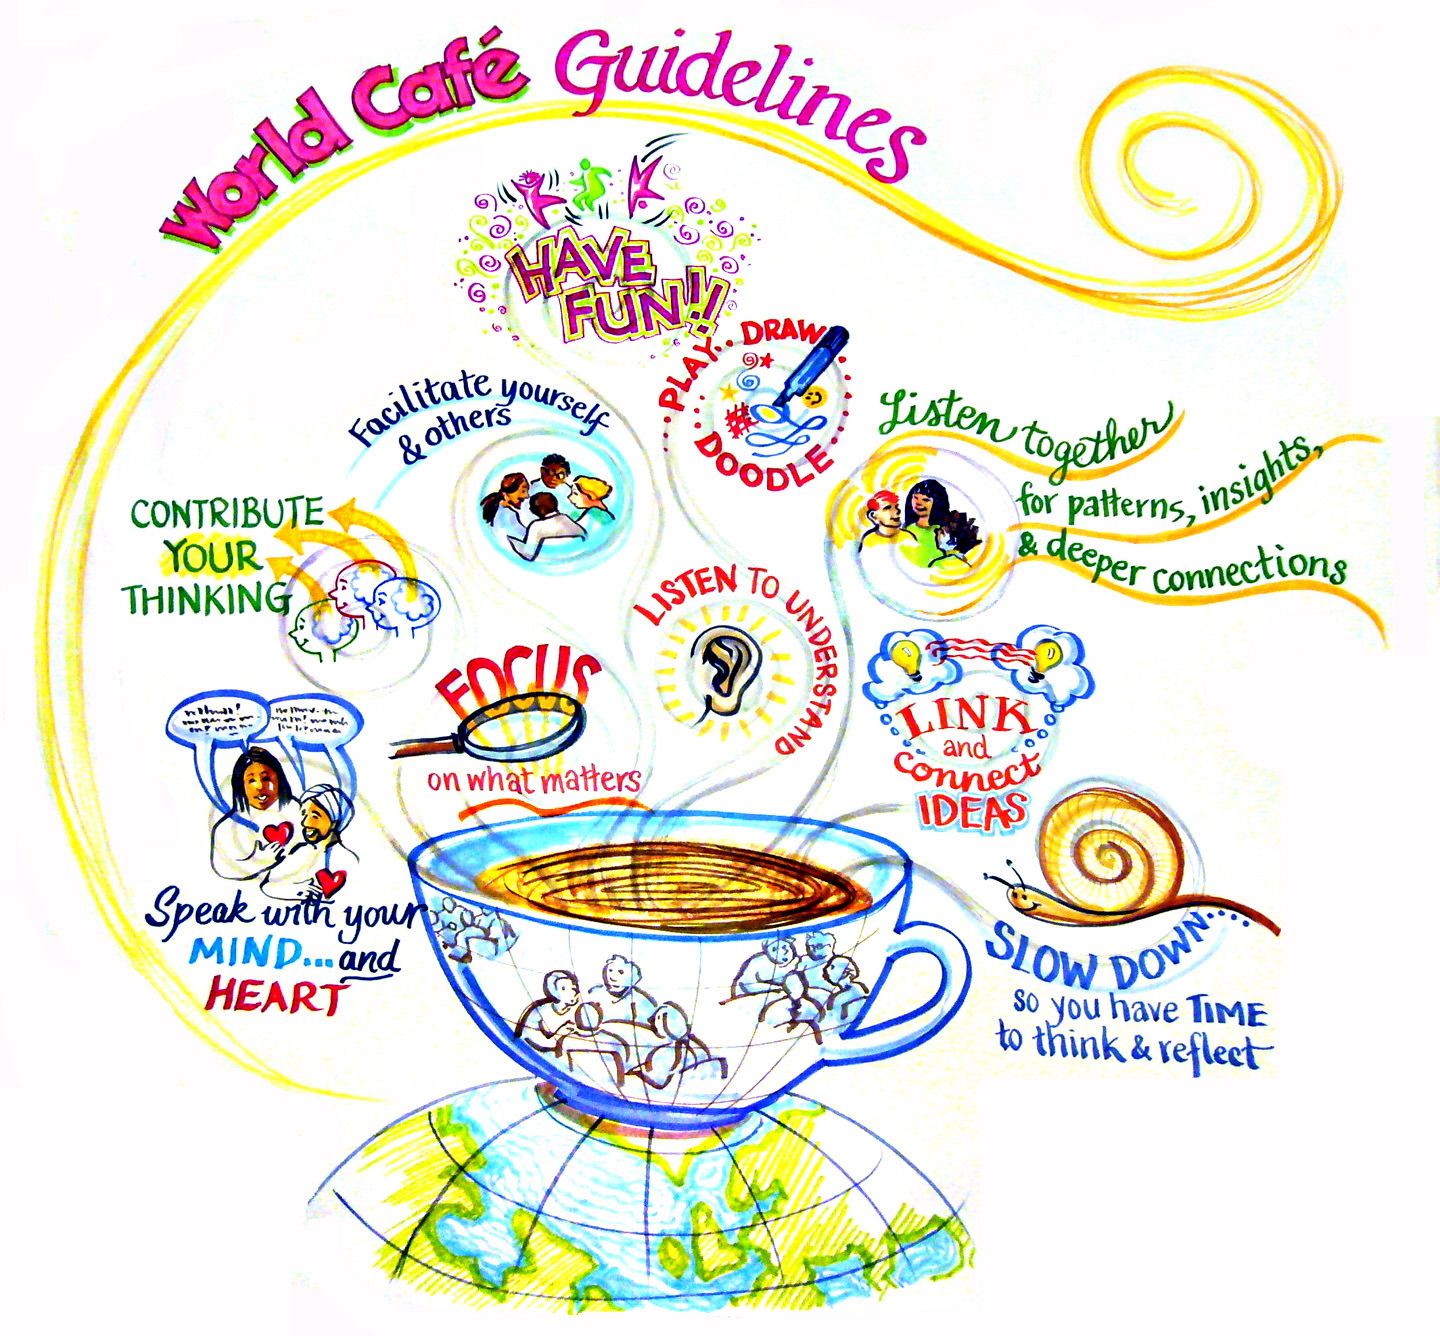 Worldcafe-guidelines.jpg